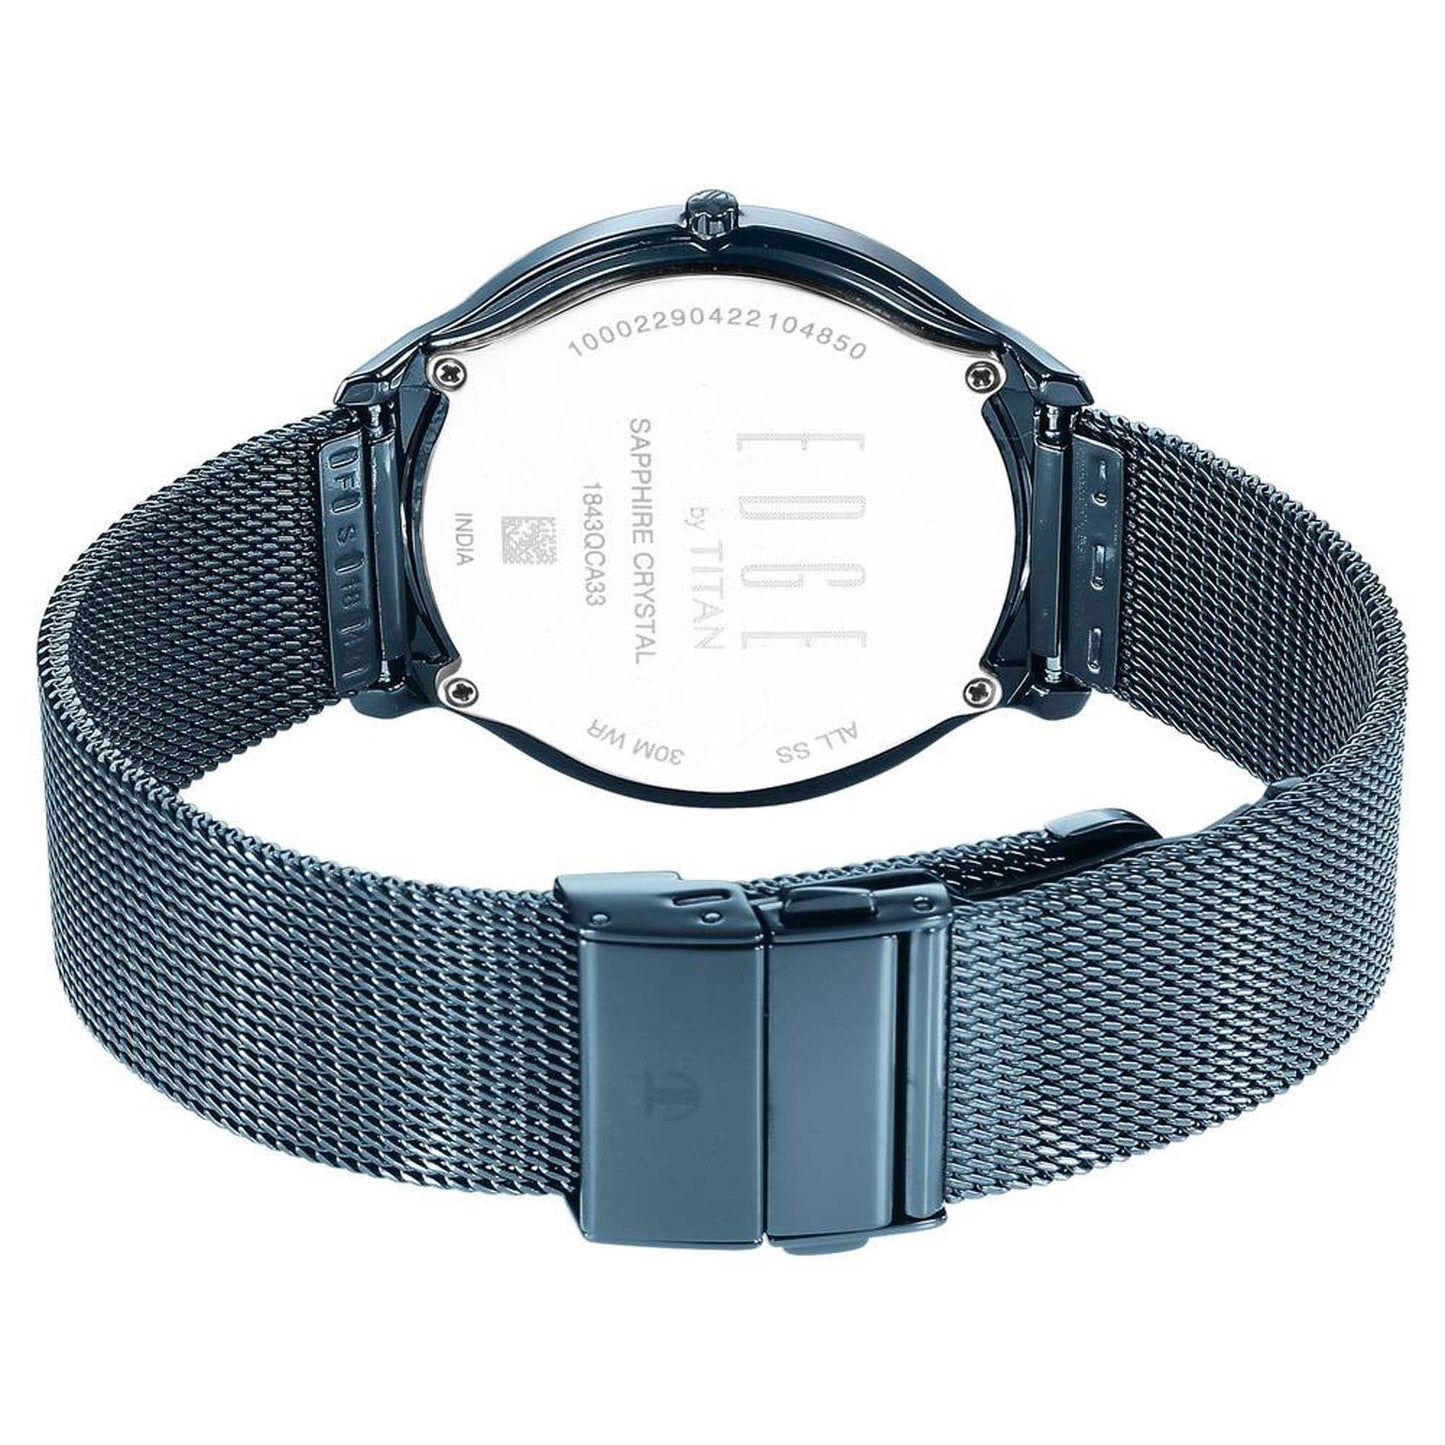 Titan Edge Baseline Blue Dial Analog Stainless Steel Strap watch for Men